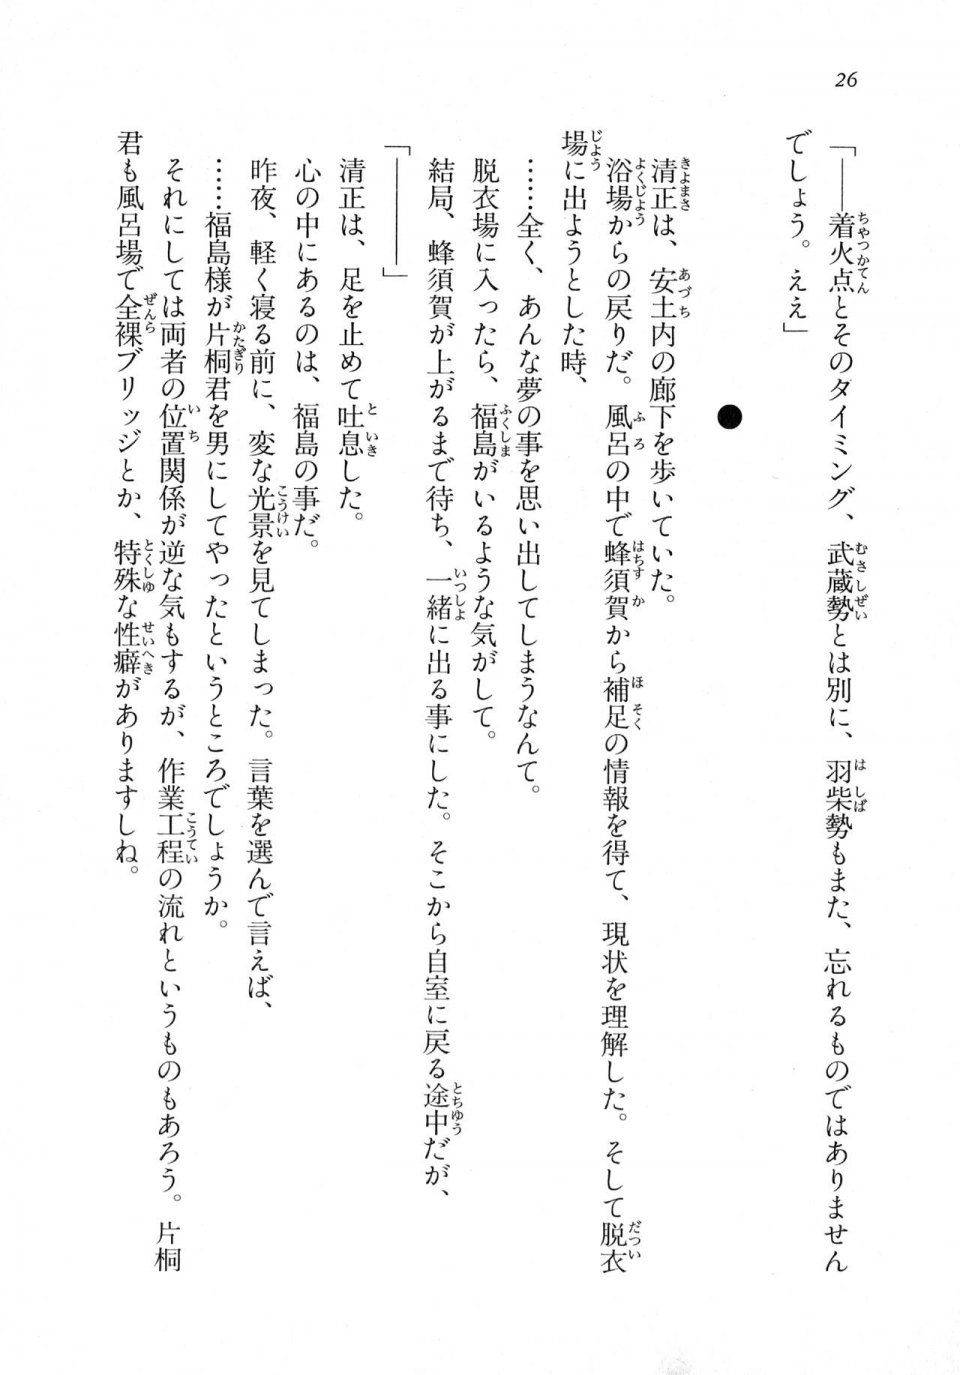 Kyoukai Senjou no Horizon LN Vol 18(7C) Part 1 - Photo #26